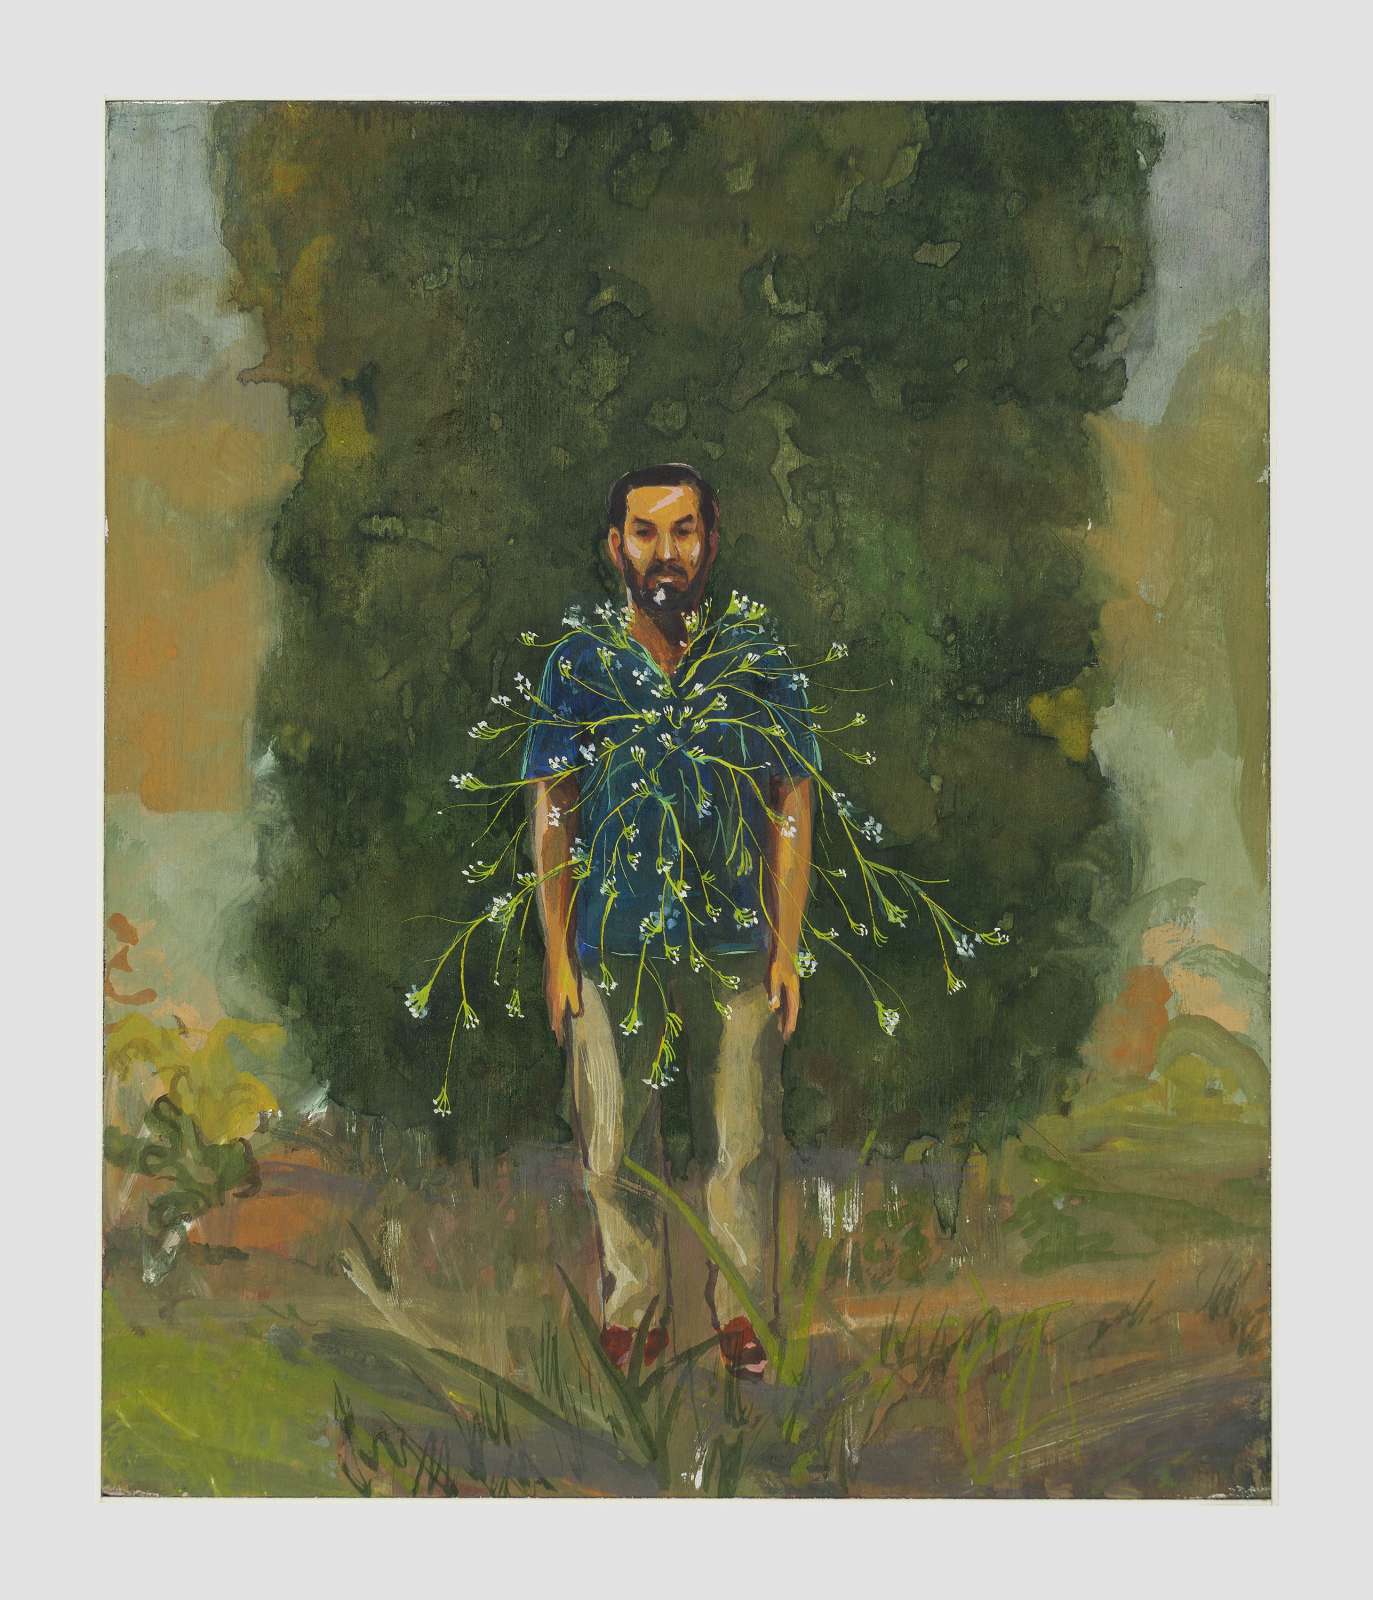 Mahesh Baliga, Flowering self, 2022. Casein on board © Mahesh Baliga Courtesy the artist, Project 88, and David Zwirner